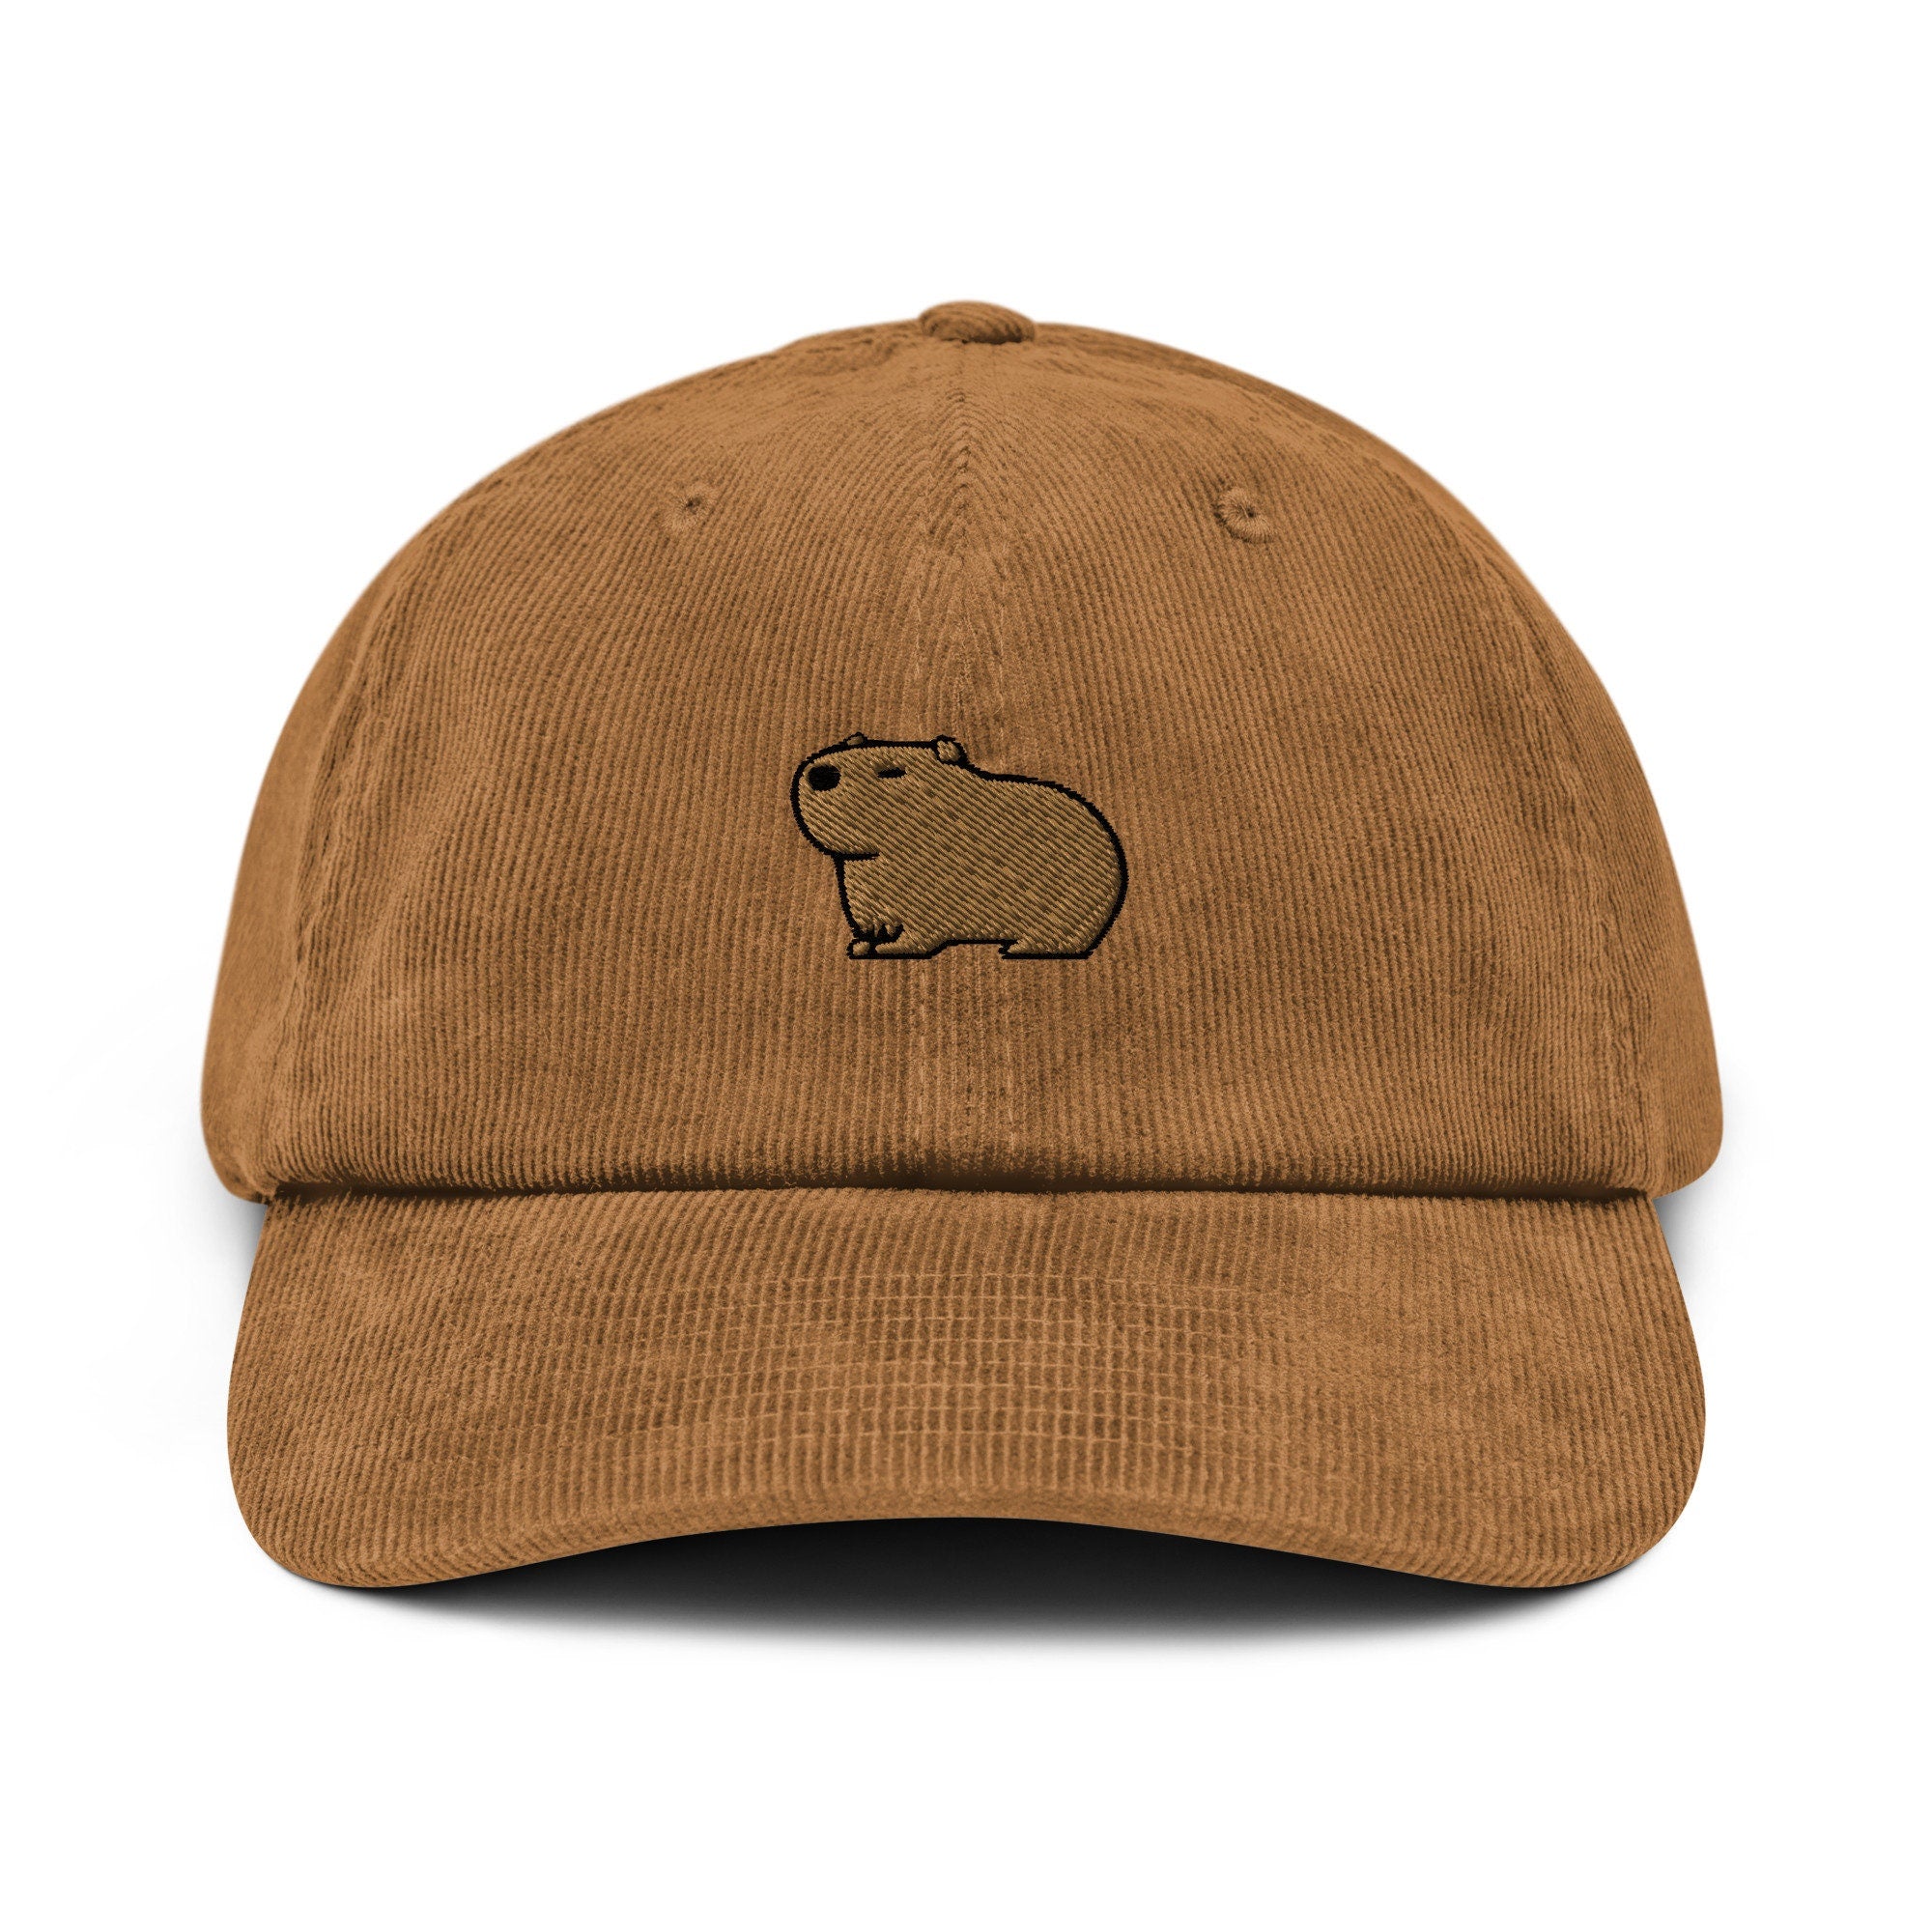 Capybara Embroidered Corduroy Dad Hat, Handmade Corduroy Baseball Cap Gift - Multiple Colors